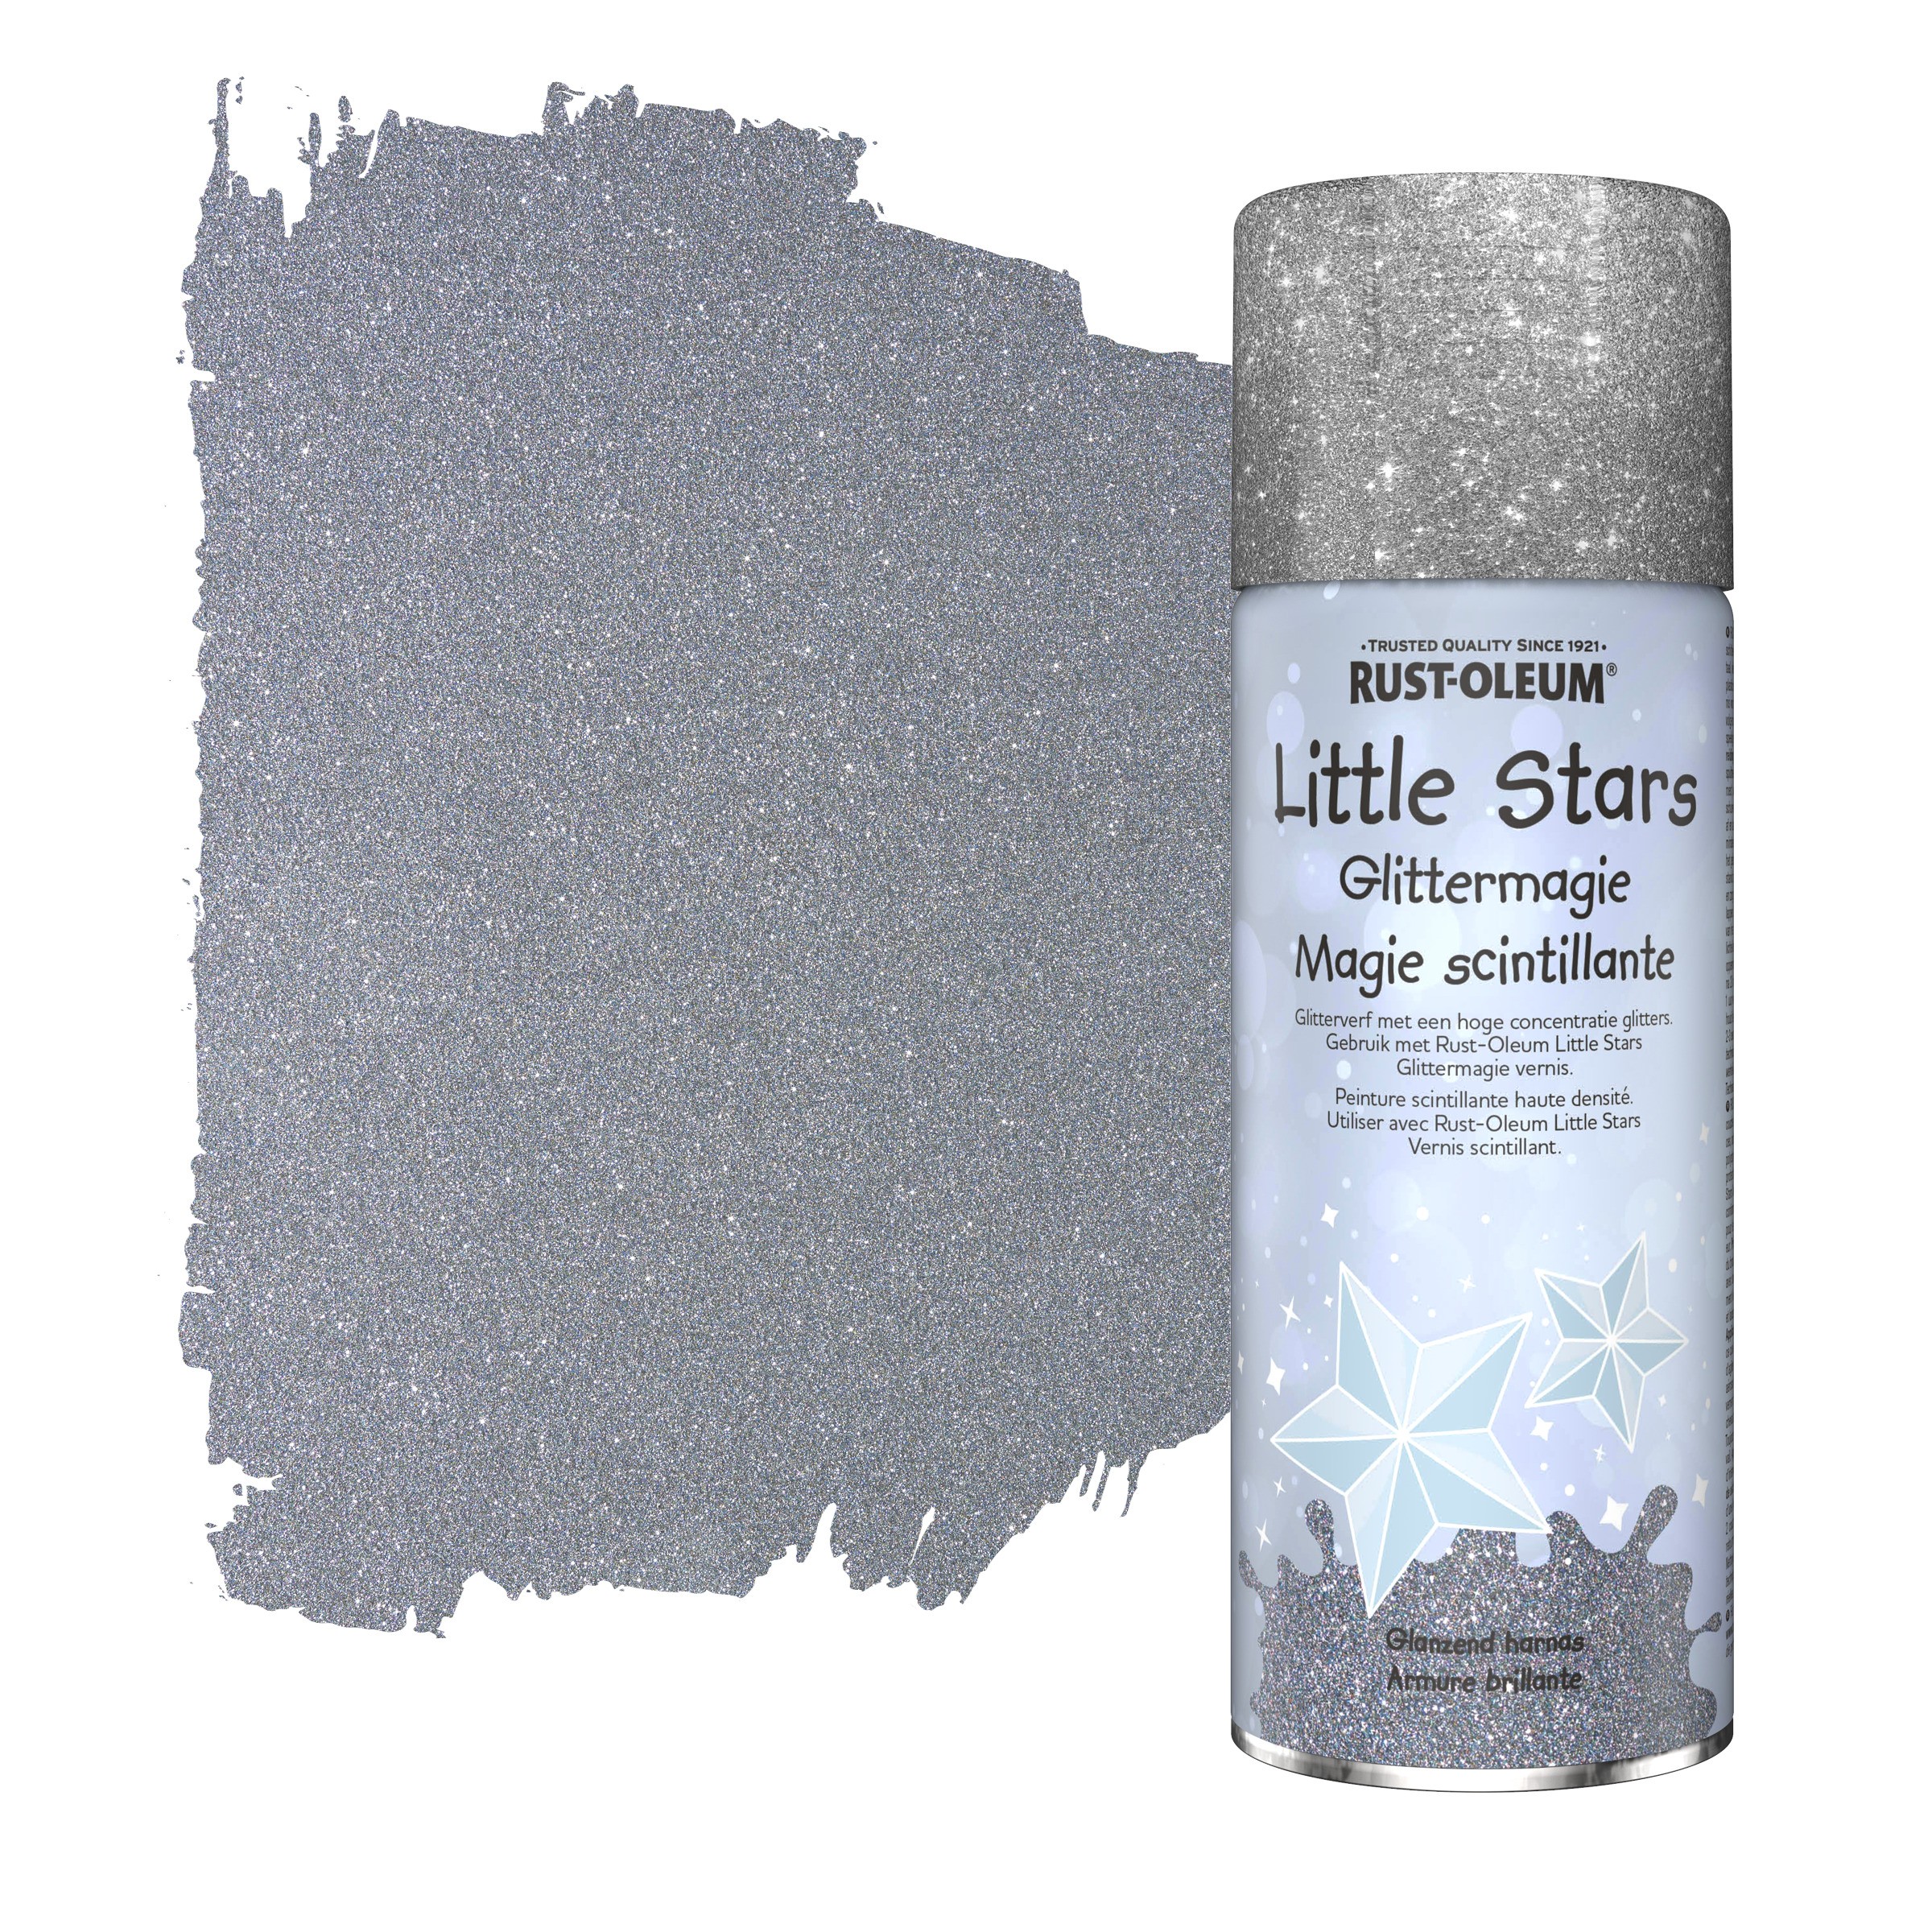 Natuurverfwinkel - Little Stars - Glittermagie Glanzend Harnas - Spray - 0,4L - image